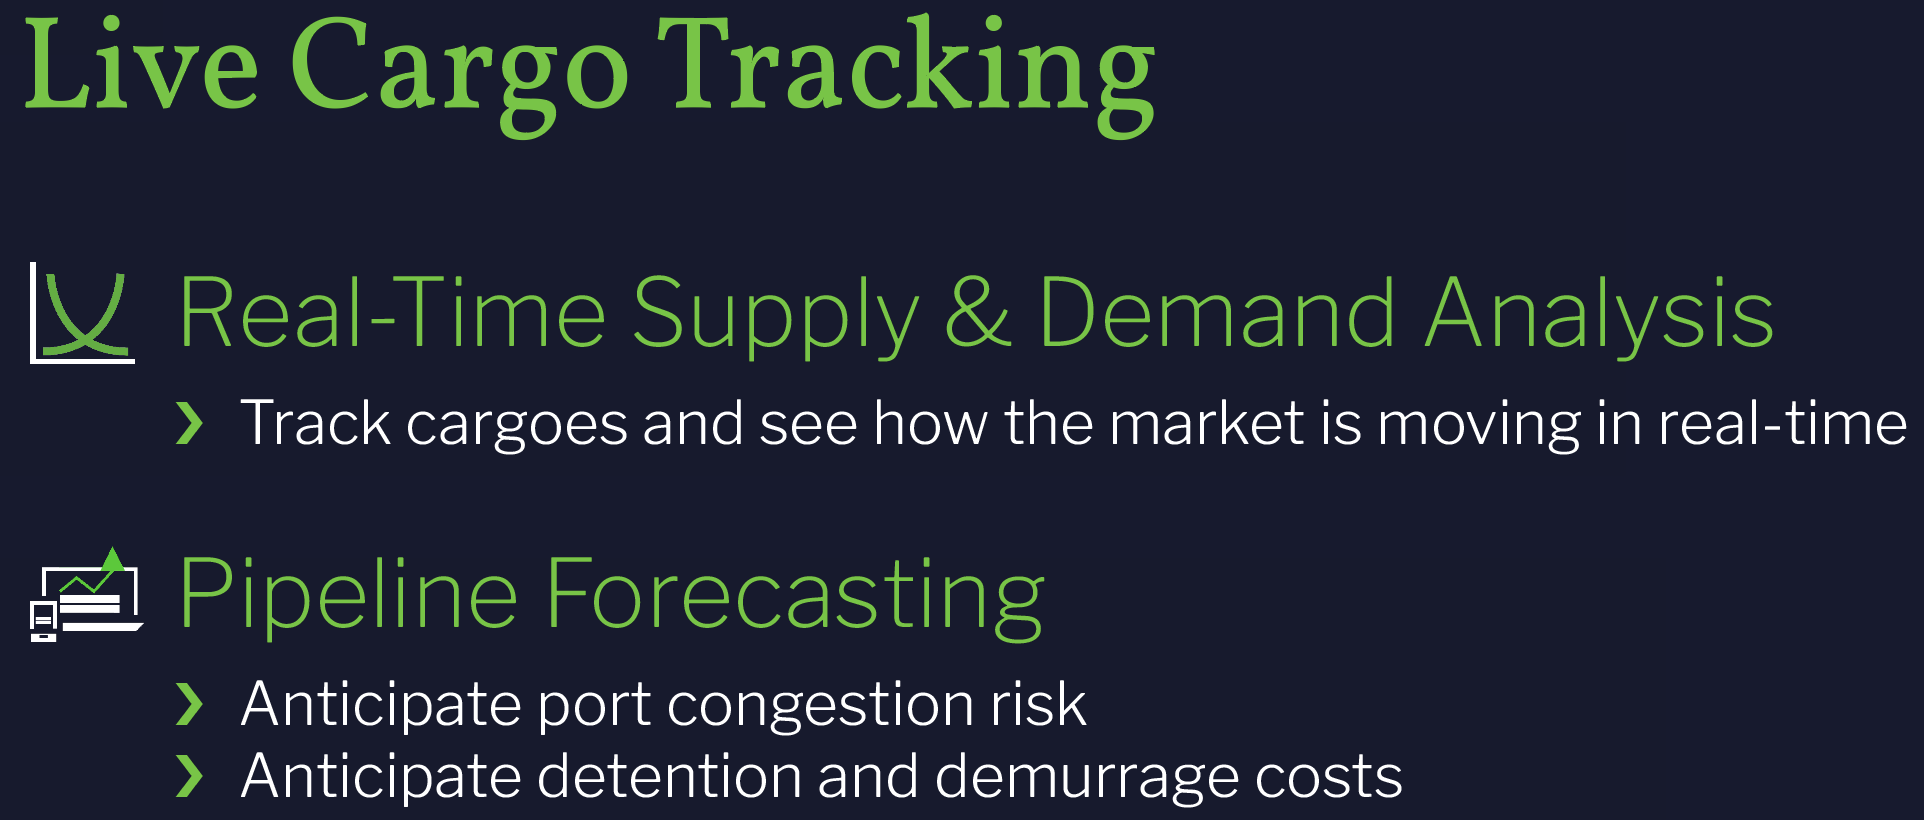 Live Cargo Tracking Benefits